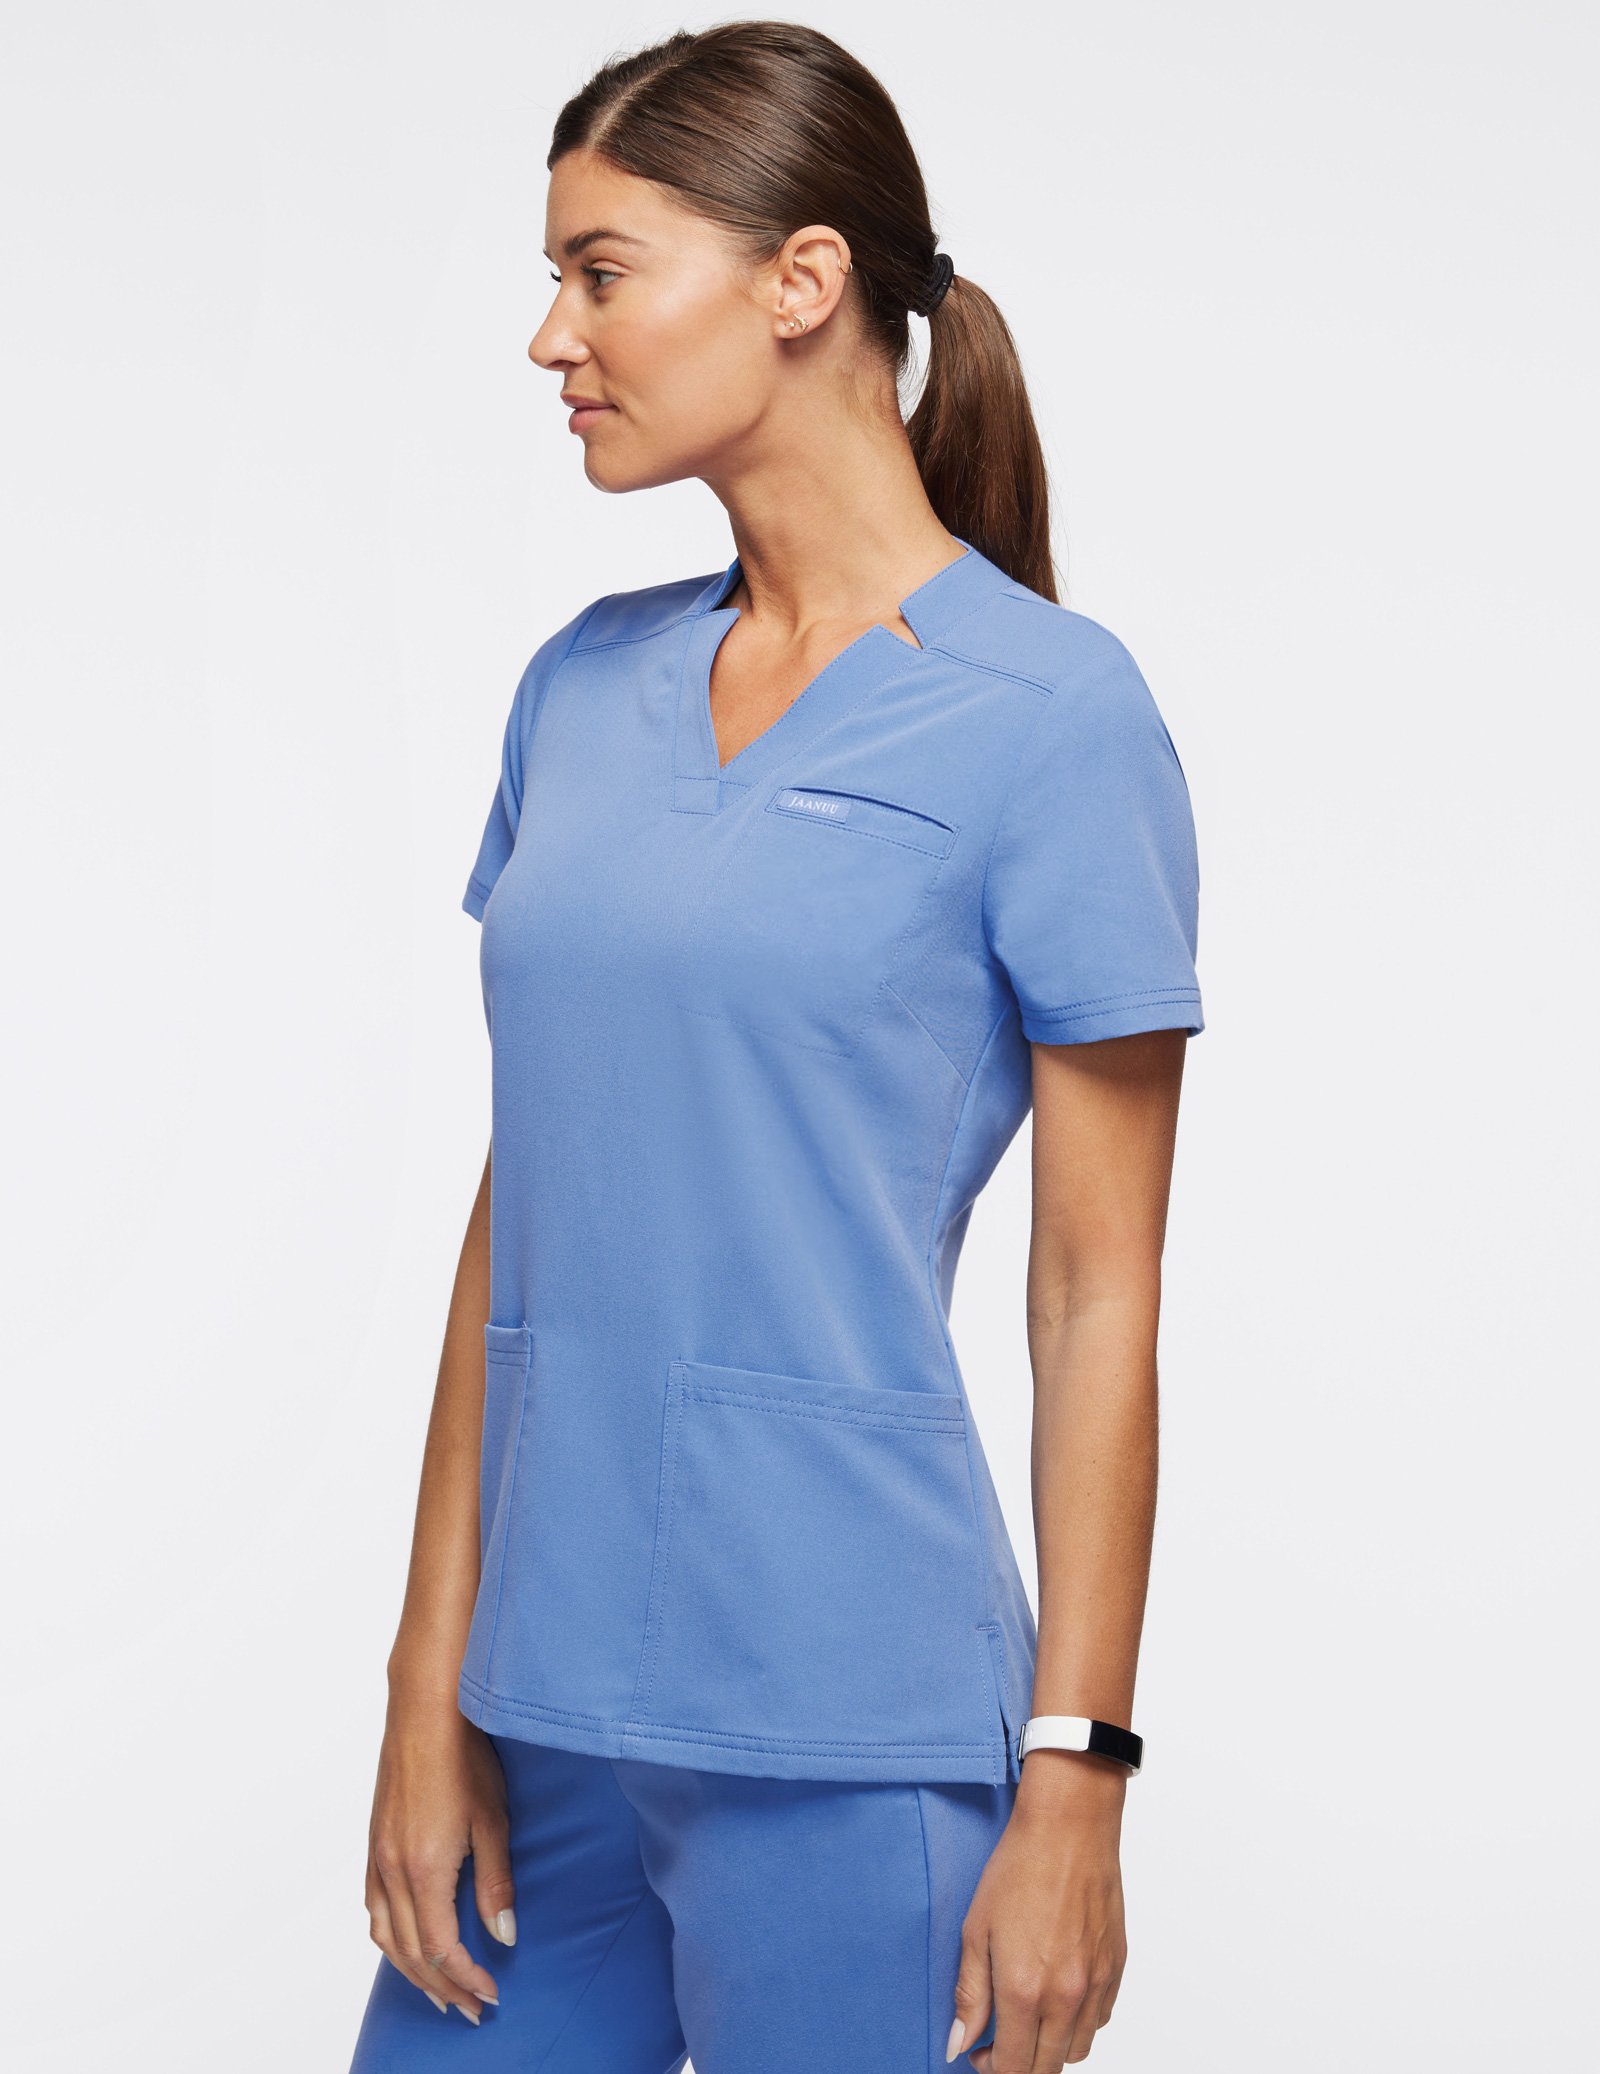 Navy, S Womens V Neck Solid Short Sleeve Scrub Top Work Uniform Shirt with Pockets 